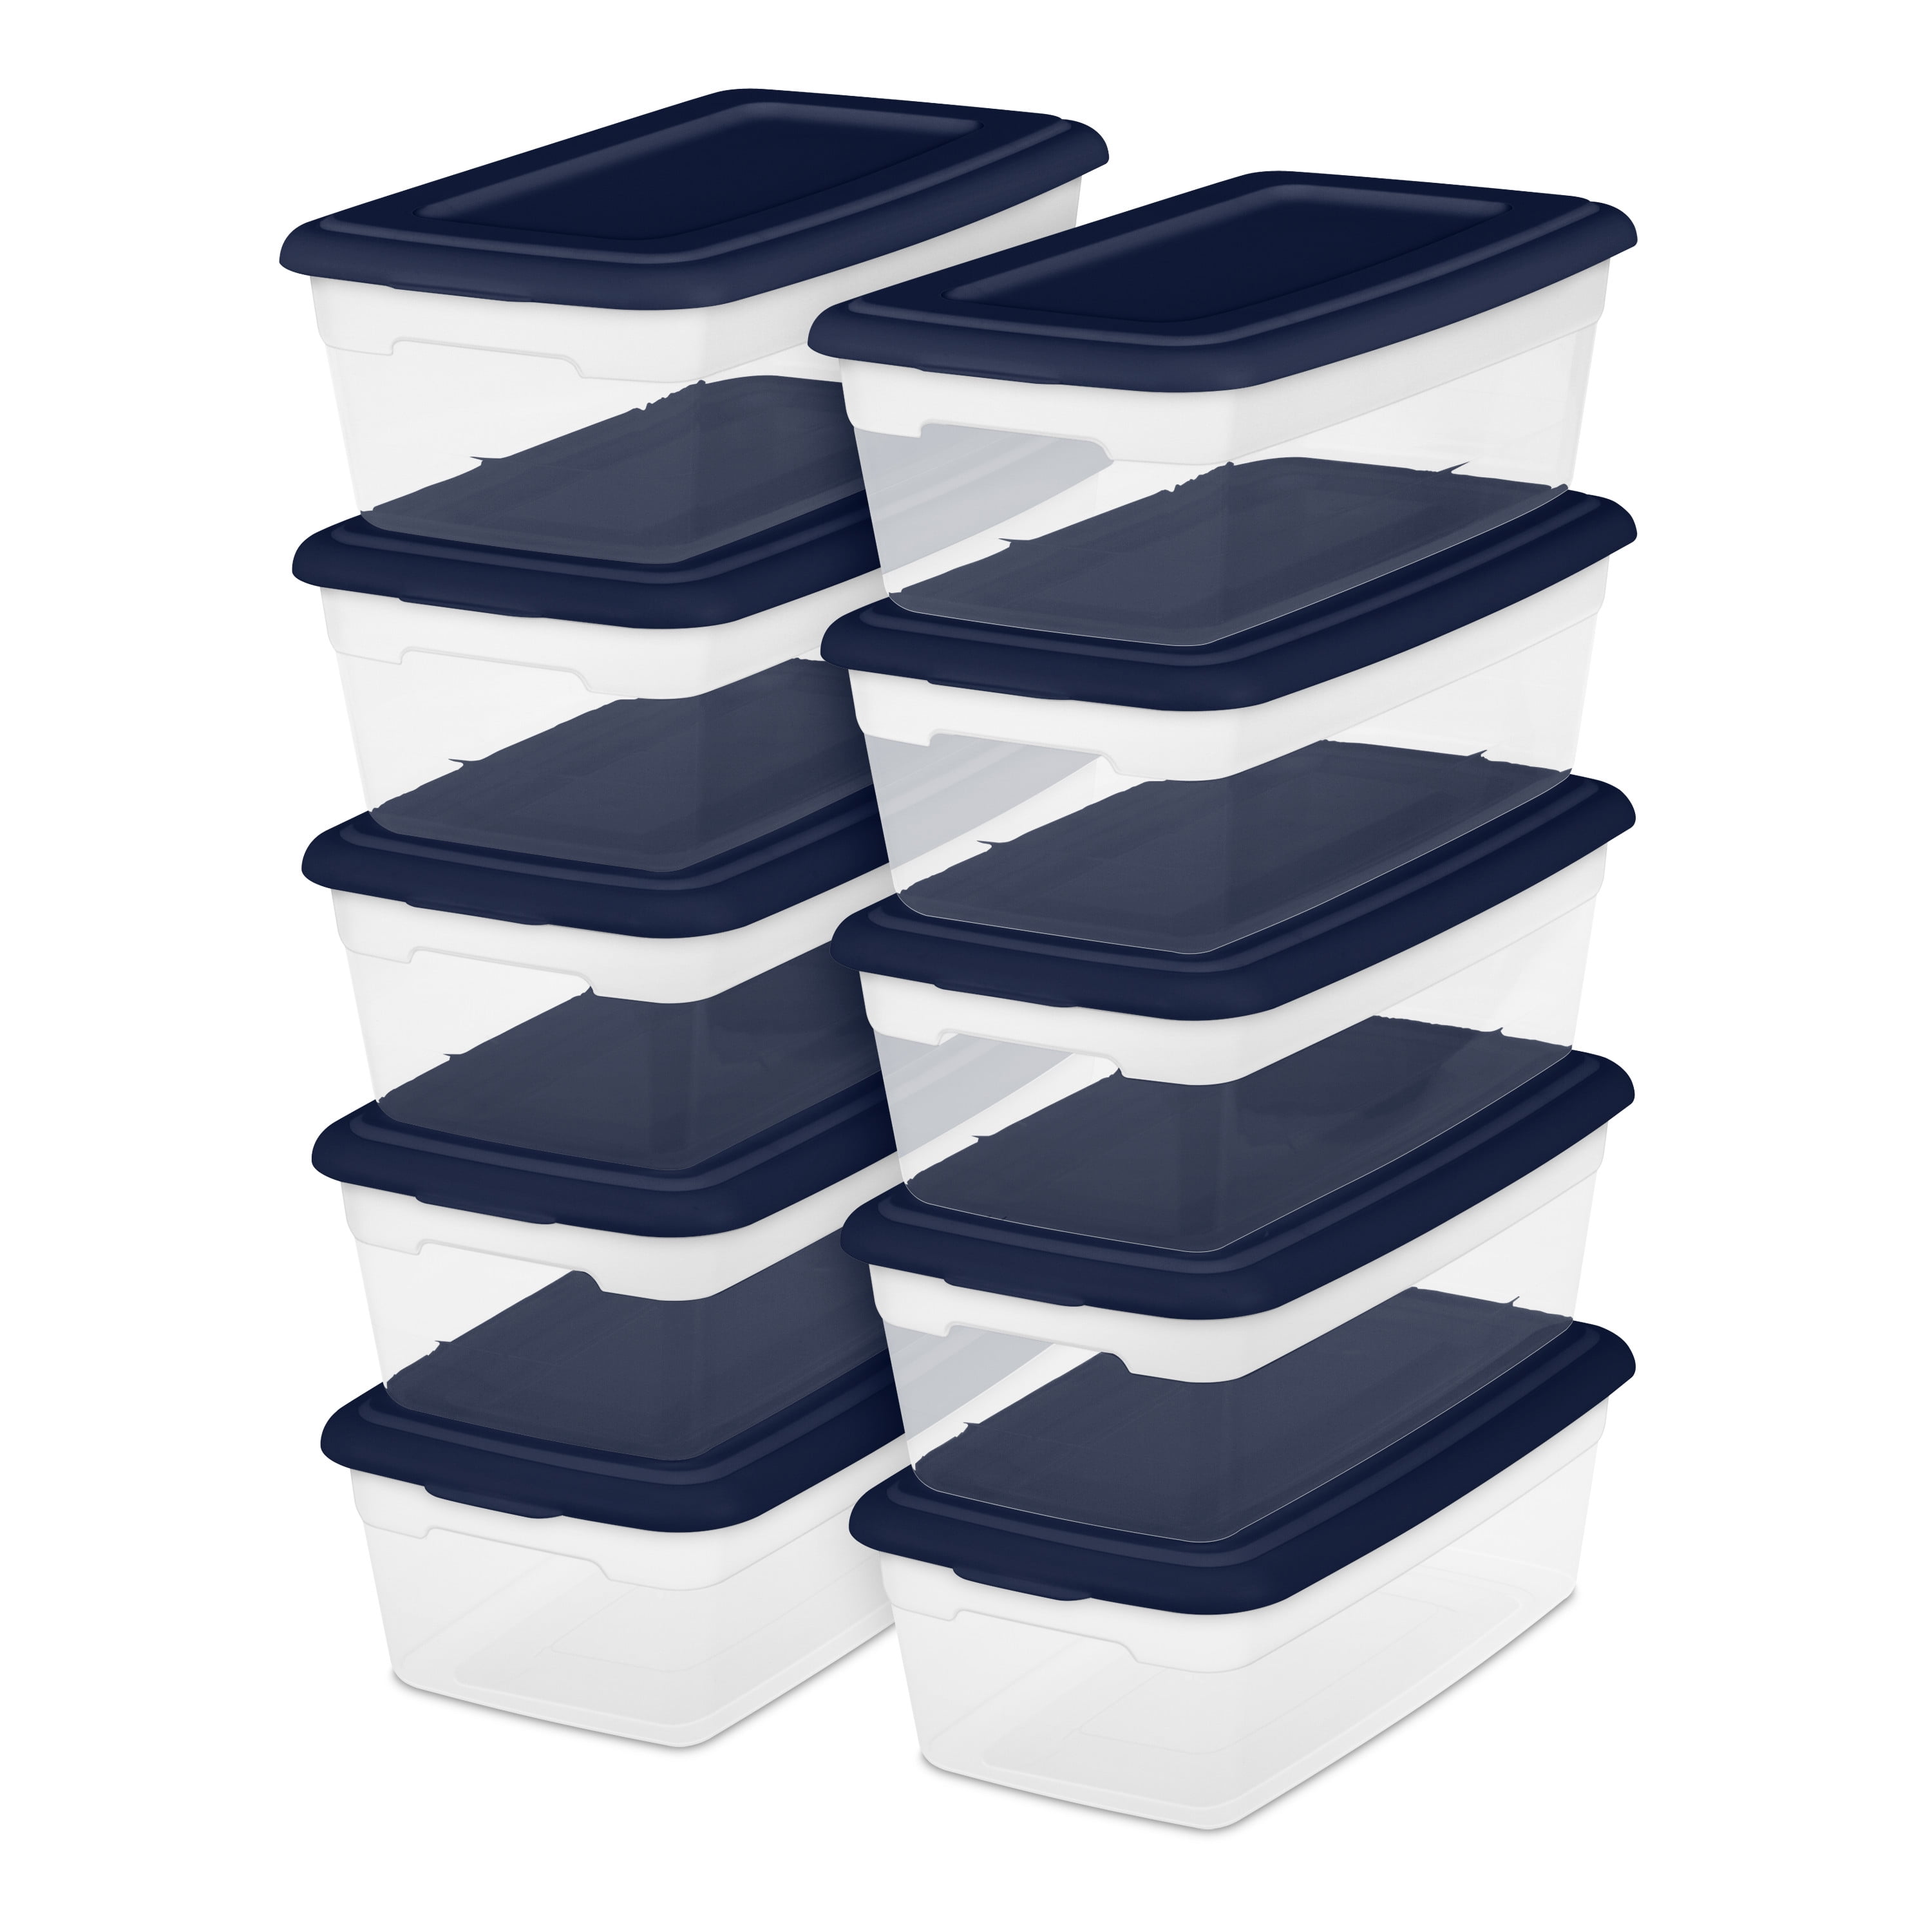 2 x Premium Clear Side Drop Mens Shoe Sneaker Box Crates storage Container rack 